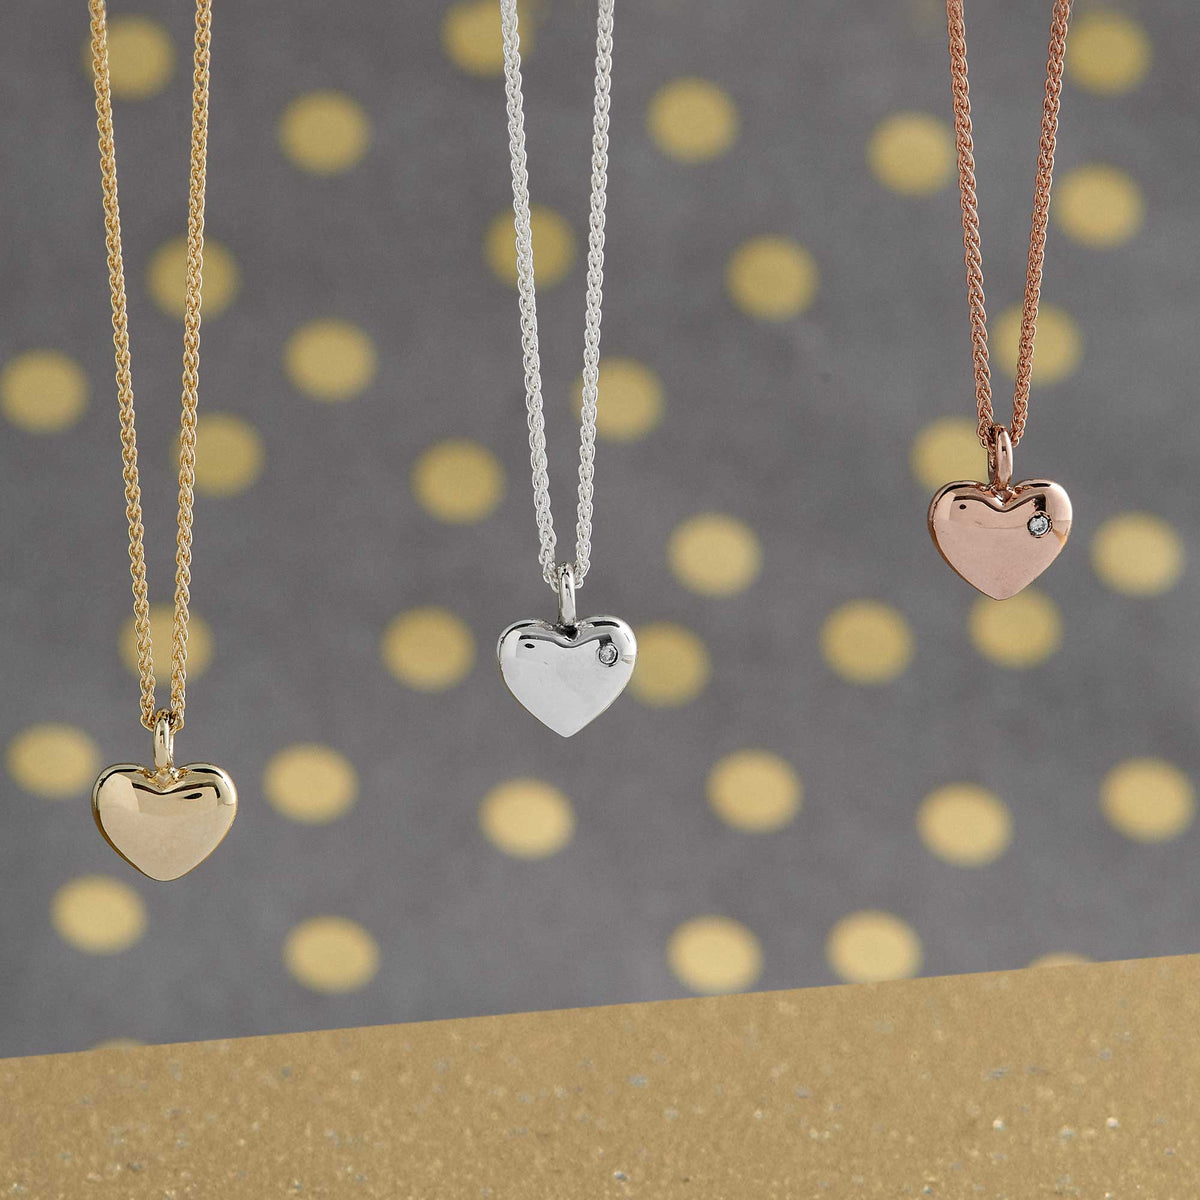 solid rose gold heart necklace with single diamond scarlett jewelery brighton uk